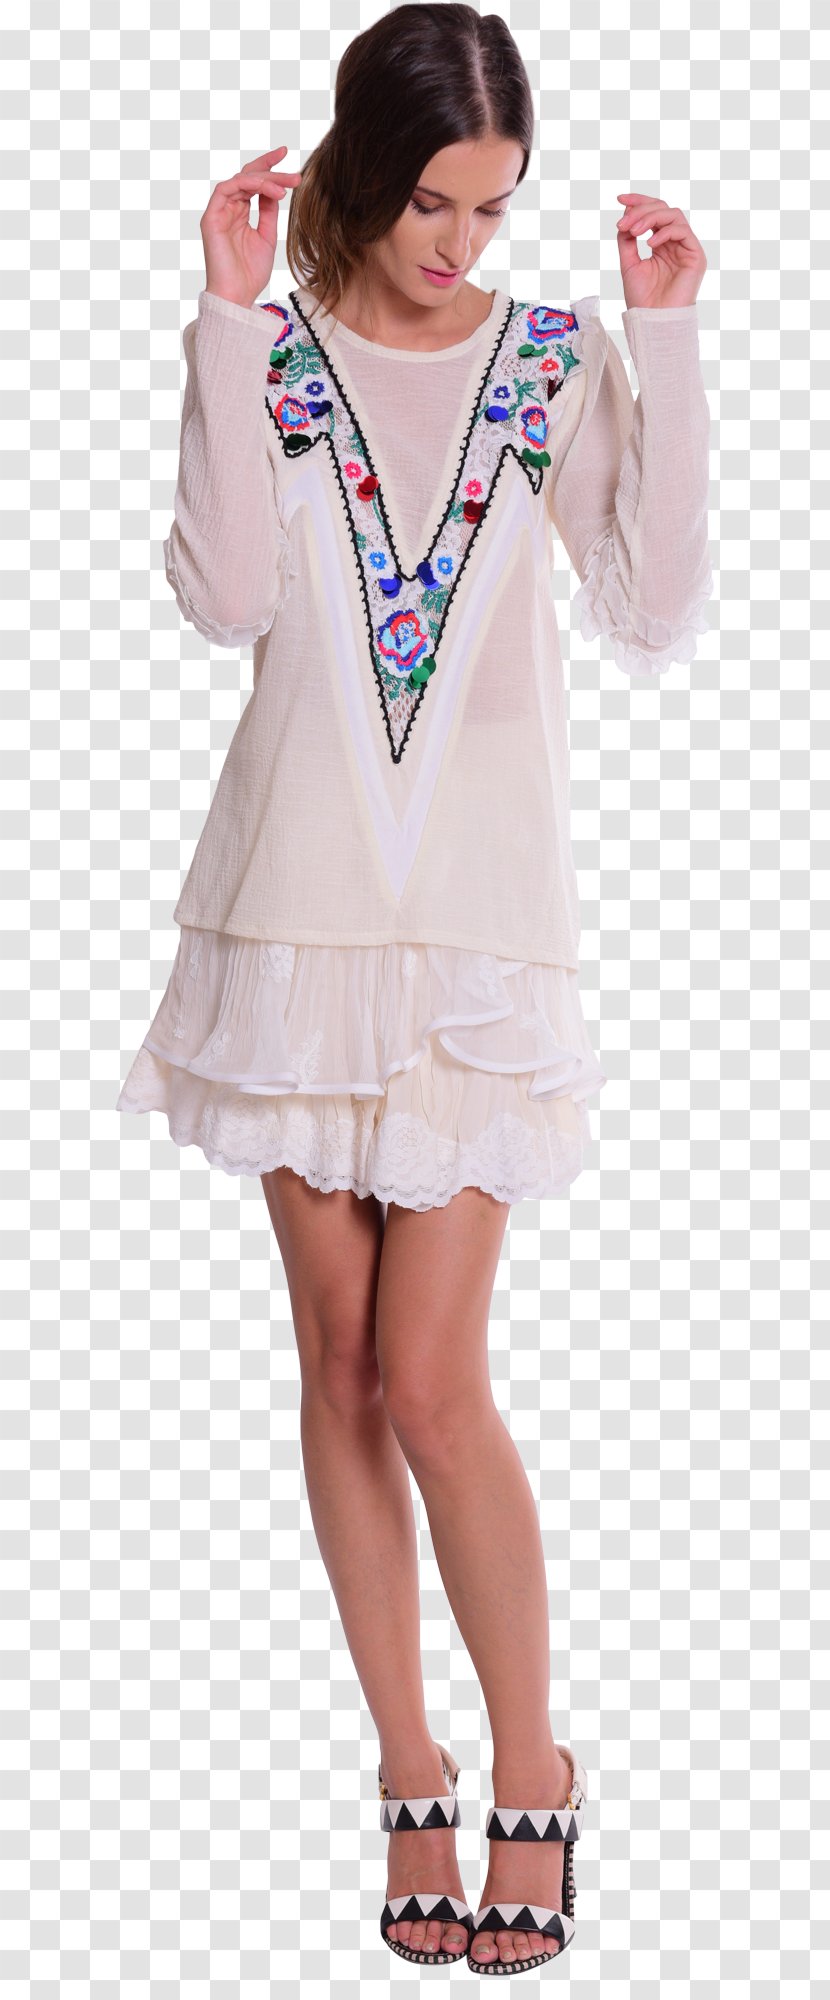 Clothing Child Model Costume - Tree - White Gauze Transparent PNG